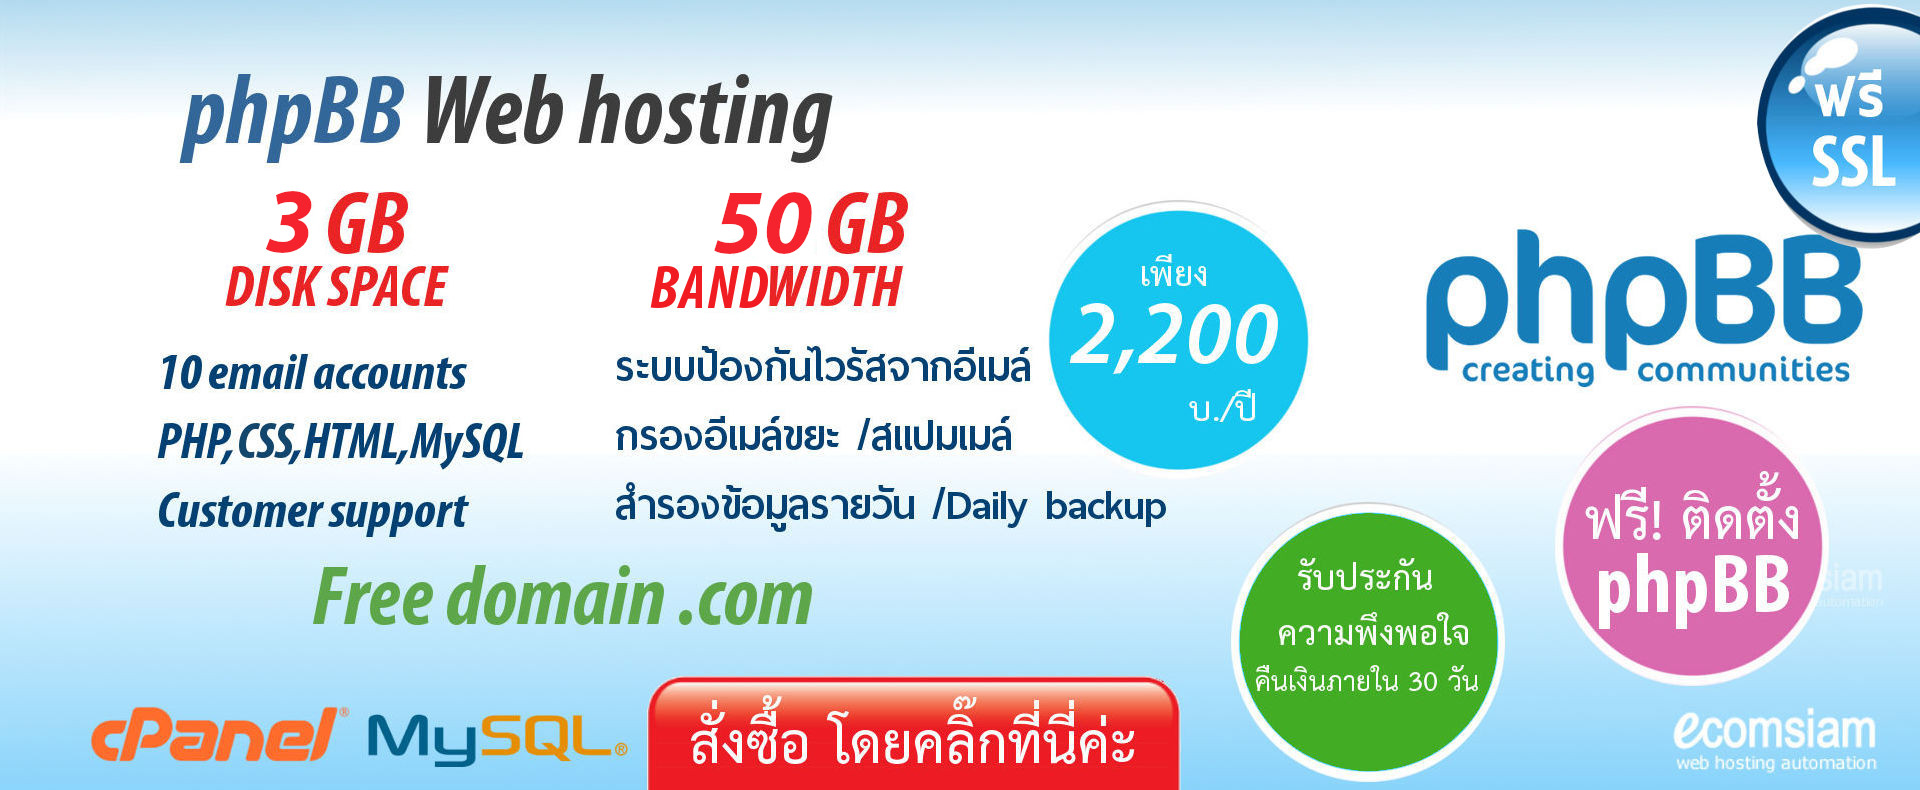 web hosting thai แนะนำ phpbb web hosting thailand เพียง 2,200 บ./ปี เว็บโฮสติ้งไทย ฟรี โดเมน ฟรี SSL ฟรีติดตั้ง แนะนำเว็บโฮสติ้ง บริการลูกค้า  Support ดูแลดี โดย thailandwebhost.com - phpbb web hosting thailand free domain